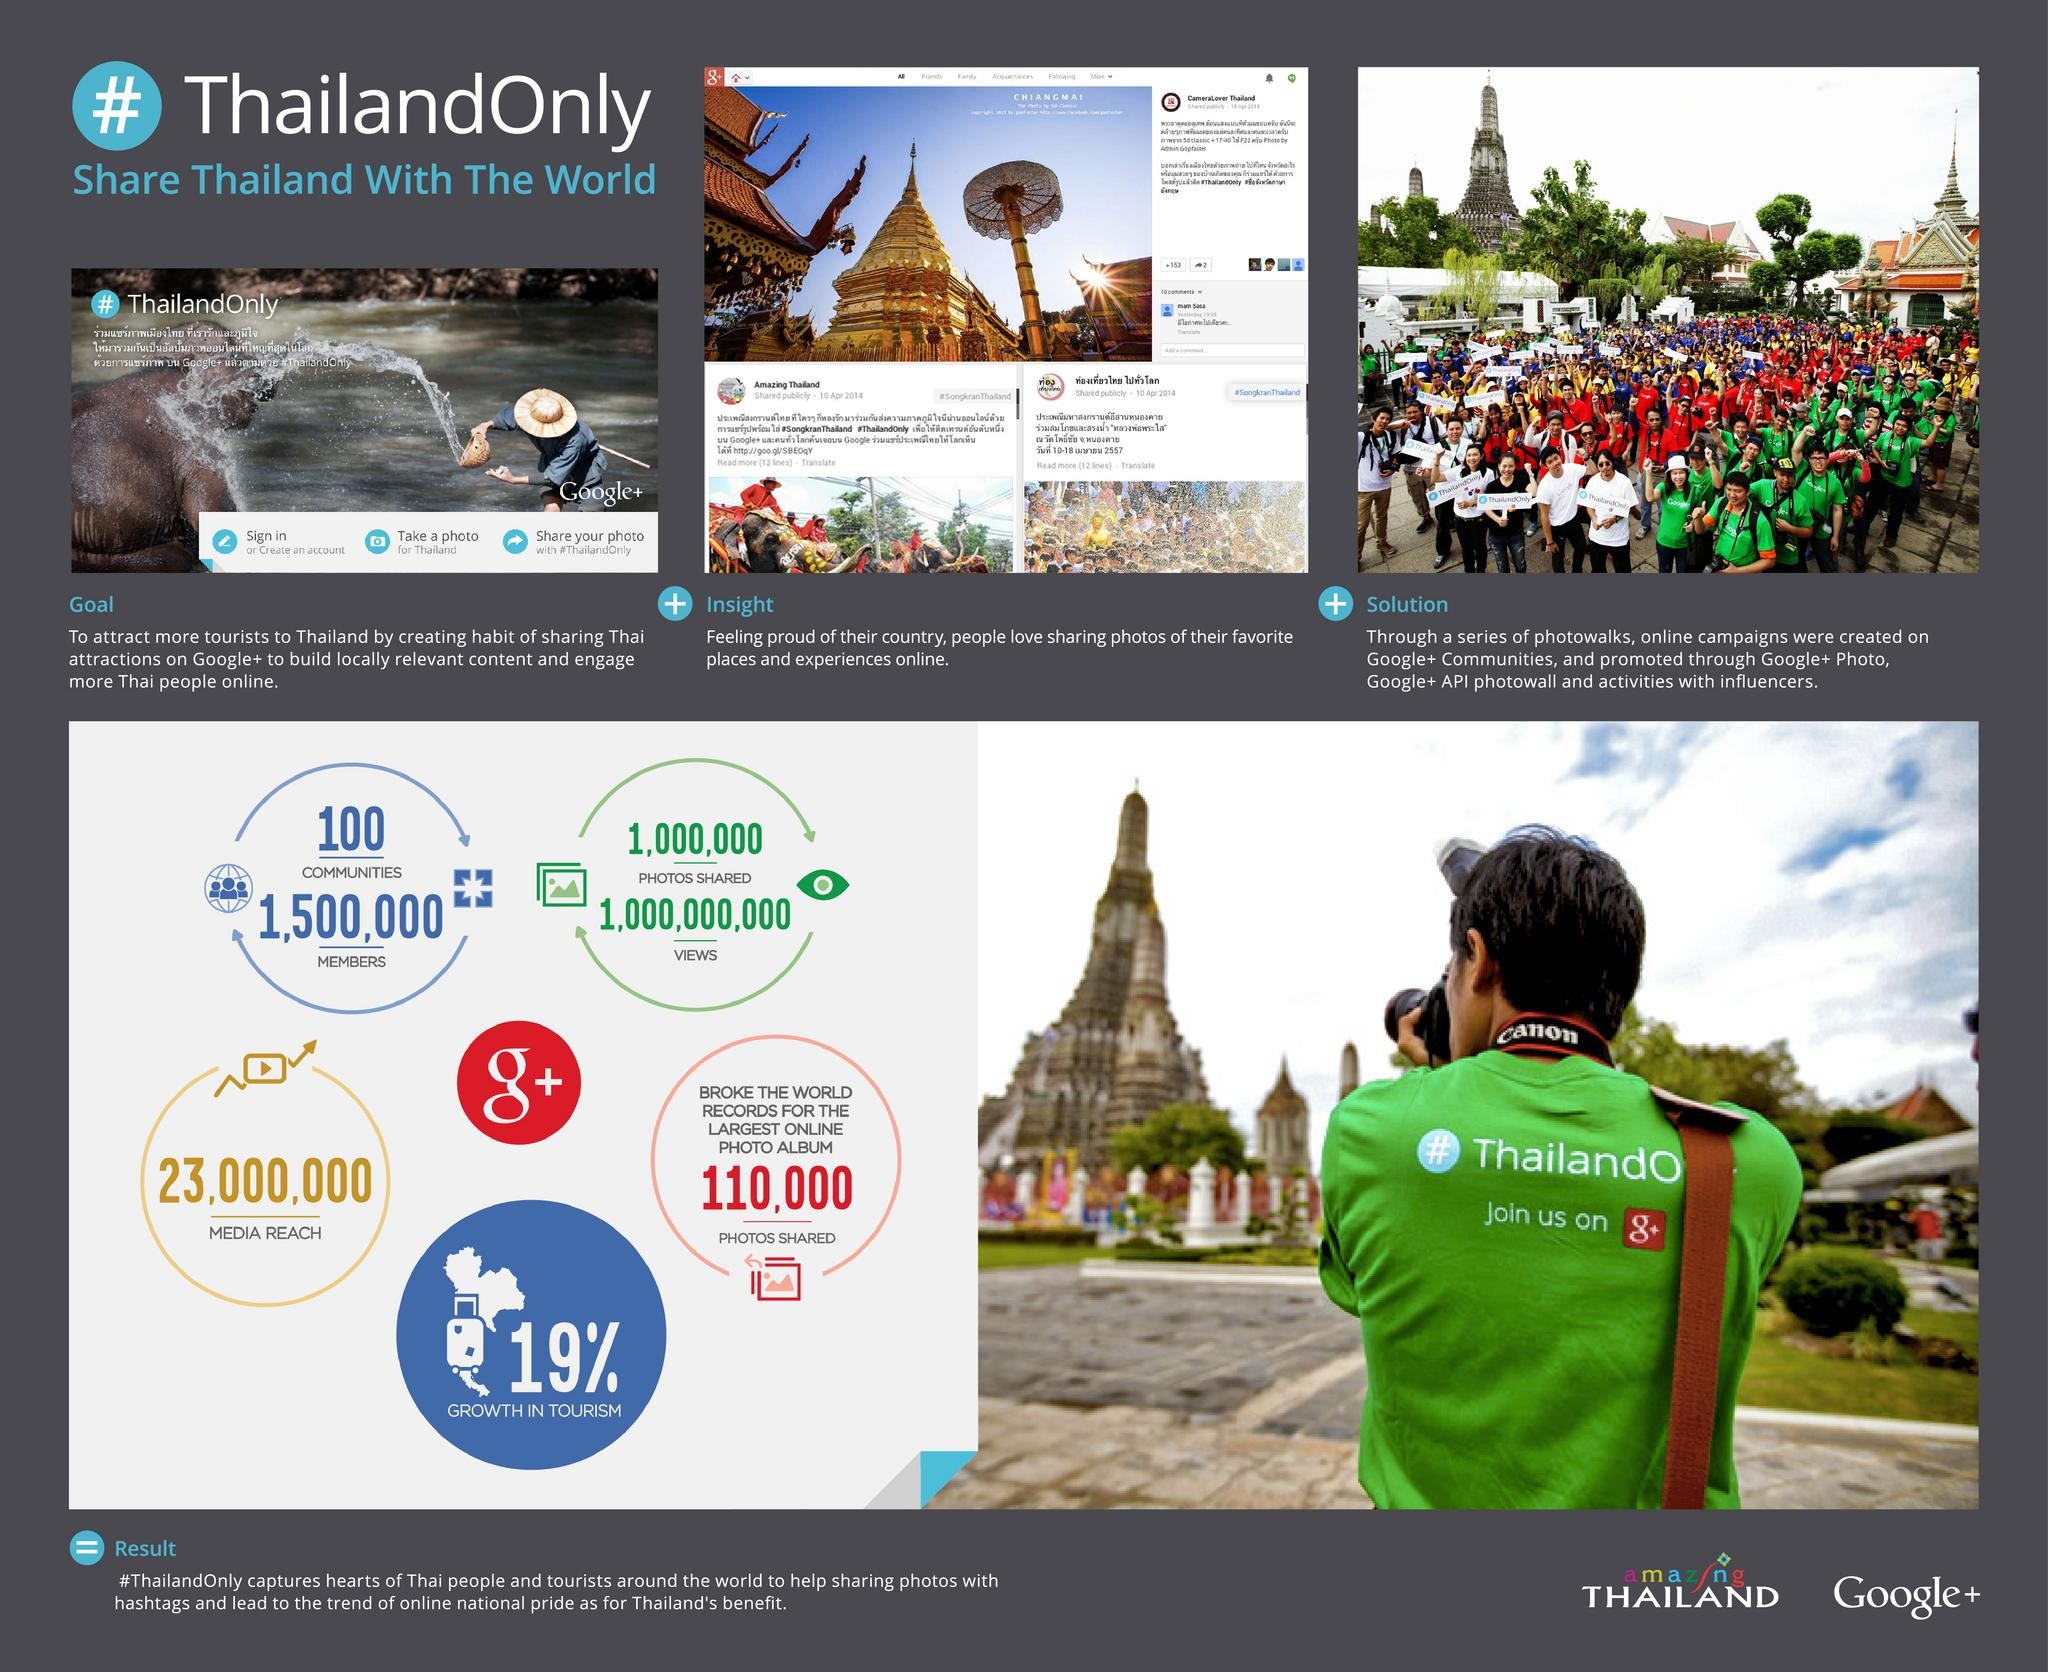 #THAILANDONLY